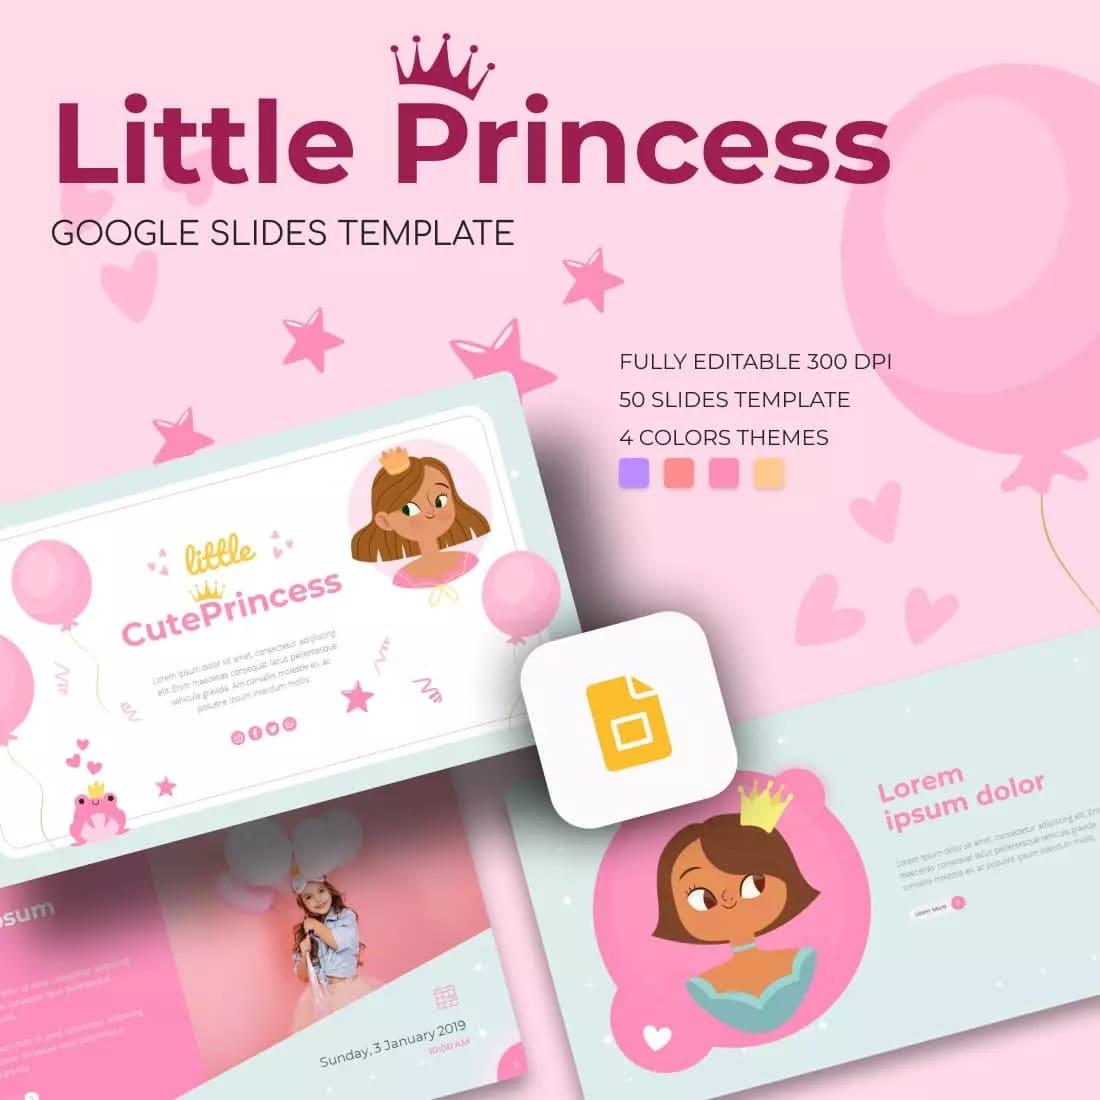 Little Princess Google Slides Template Preview 1.